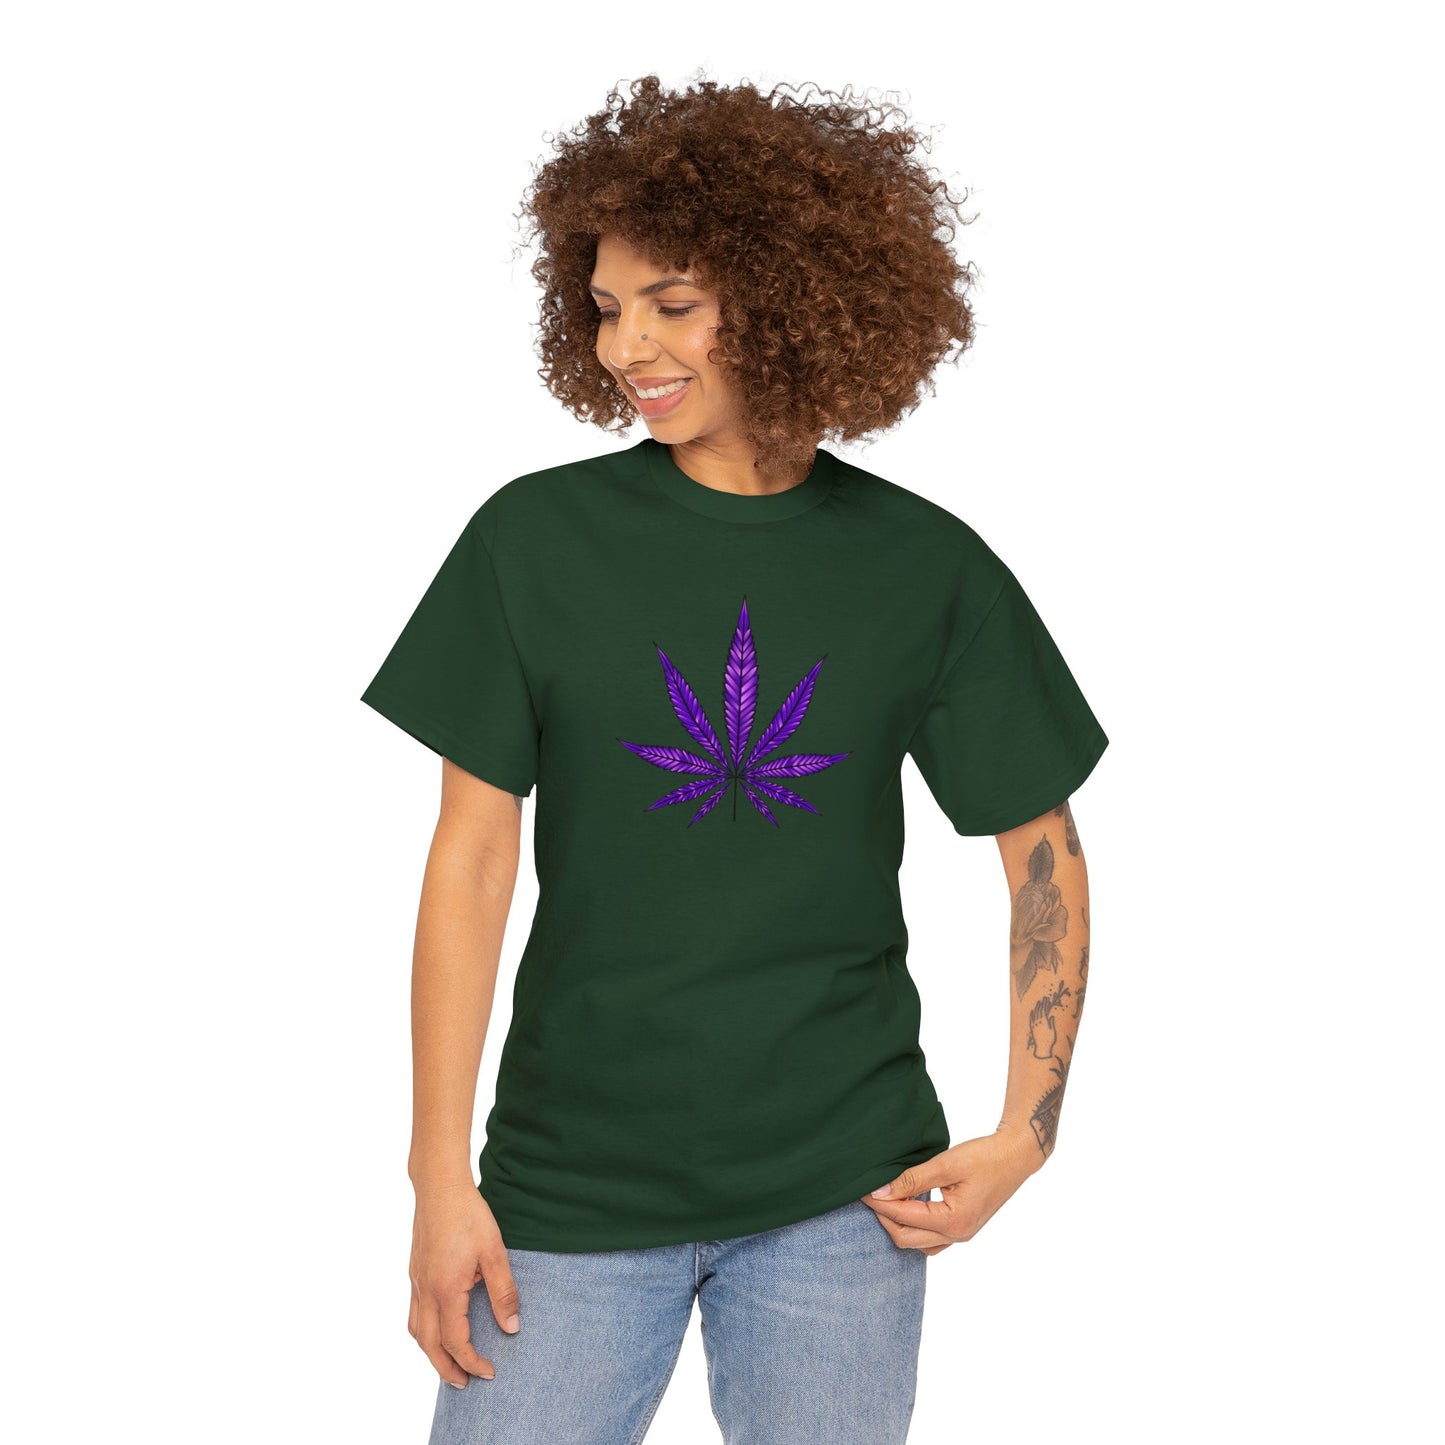 A person is wearing a Purple Cannabis Leaf Tee, celebrating marijuana culture.